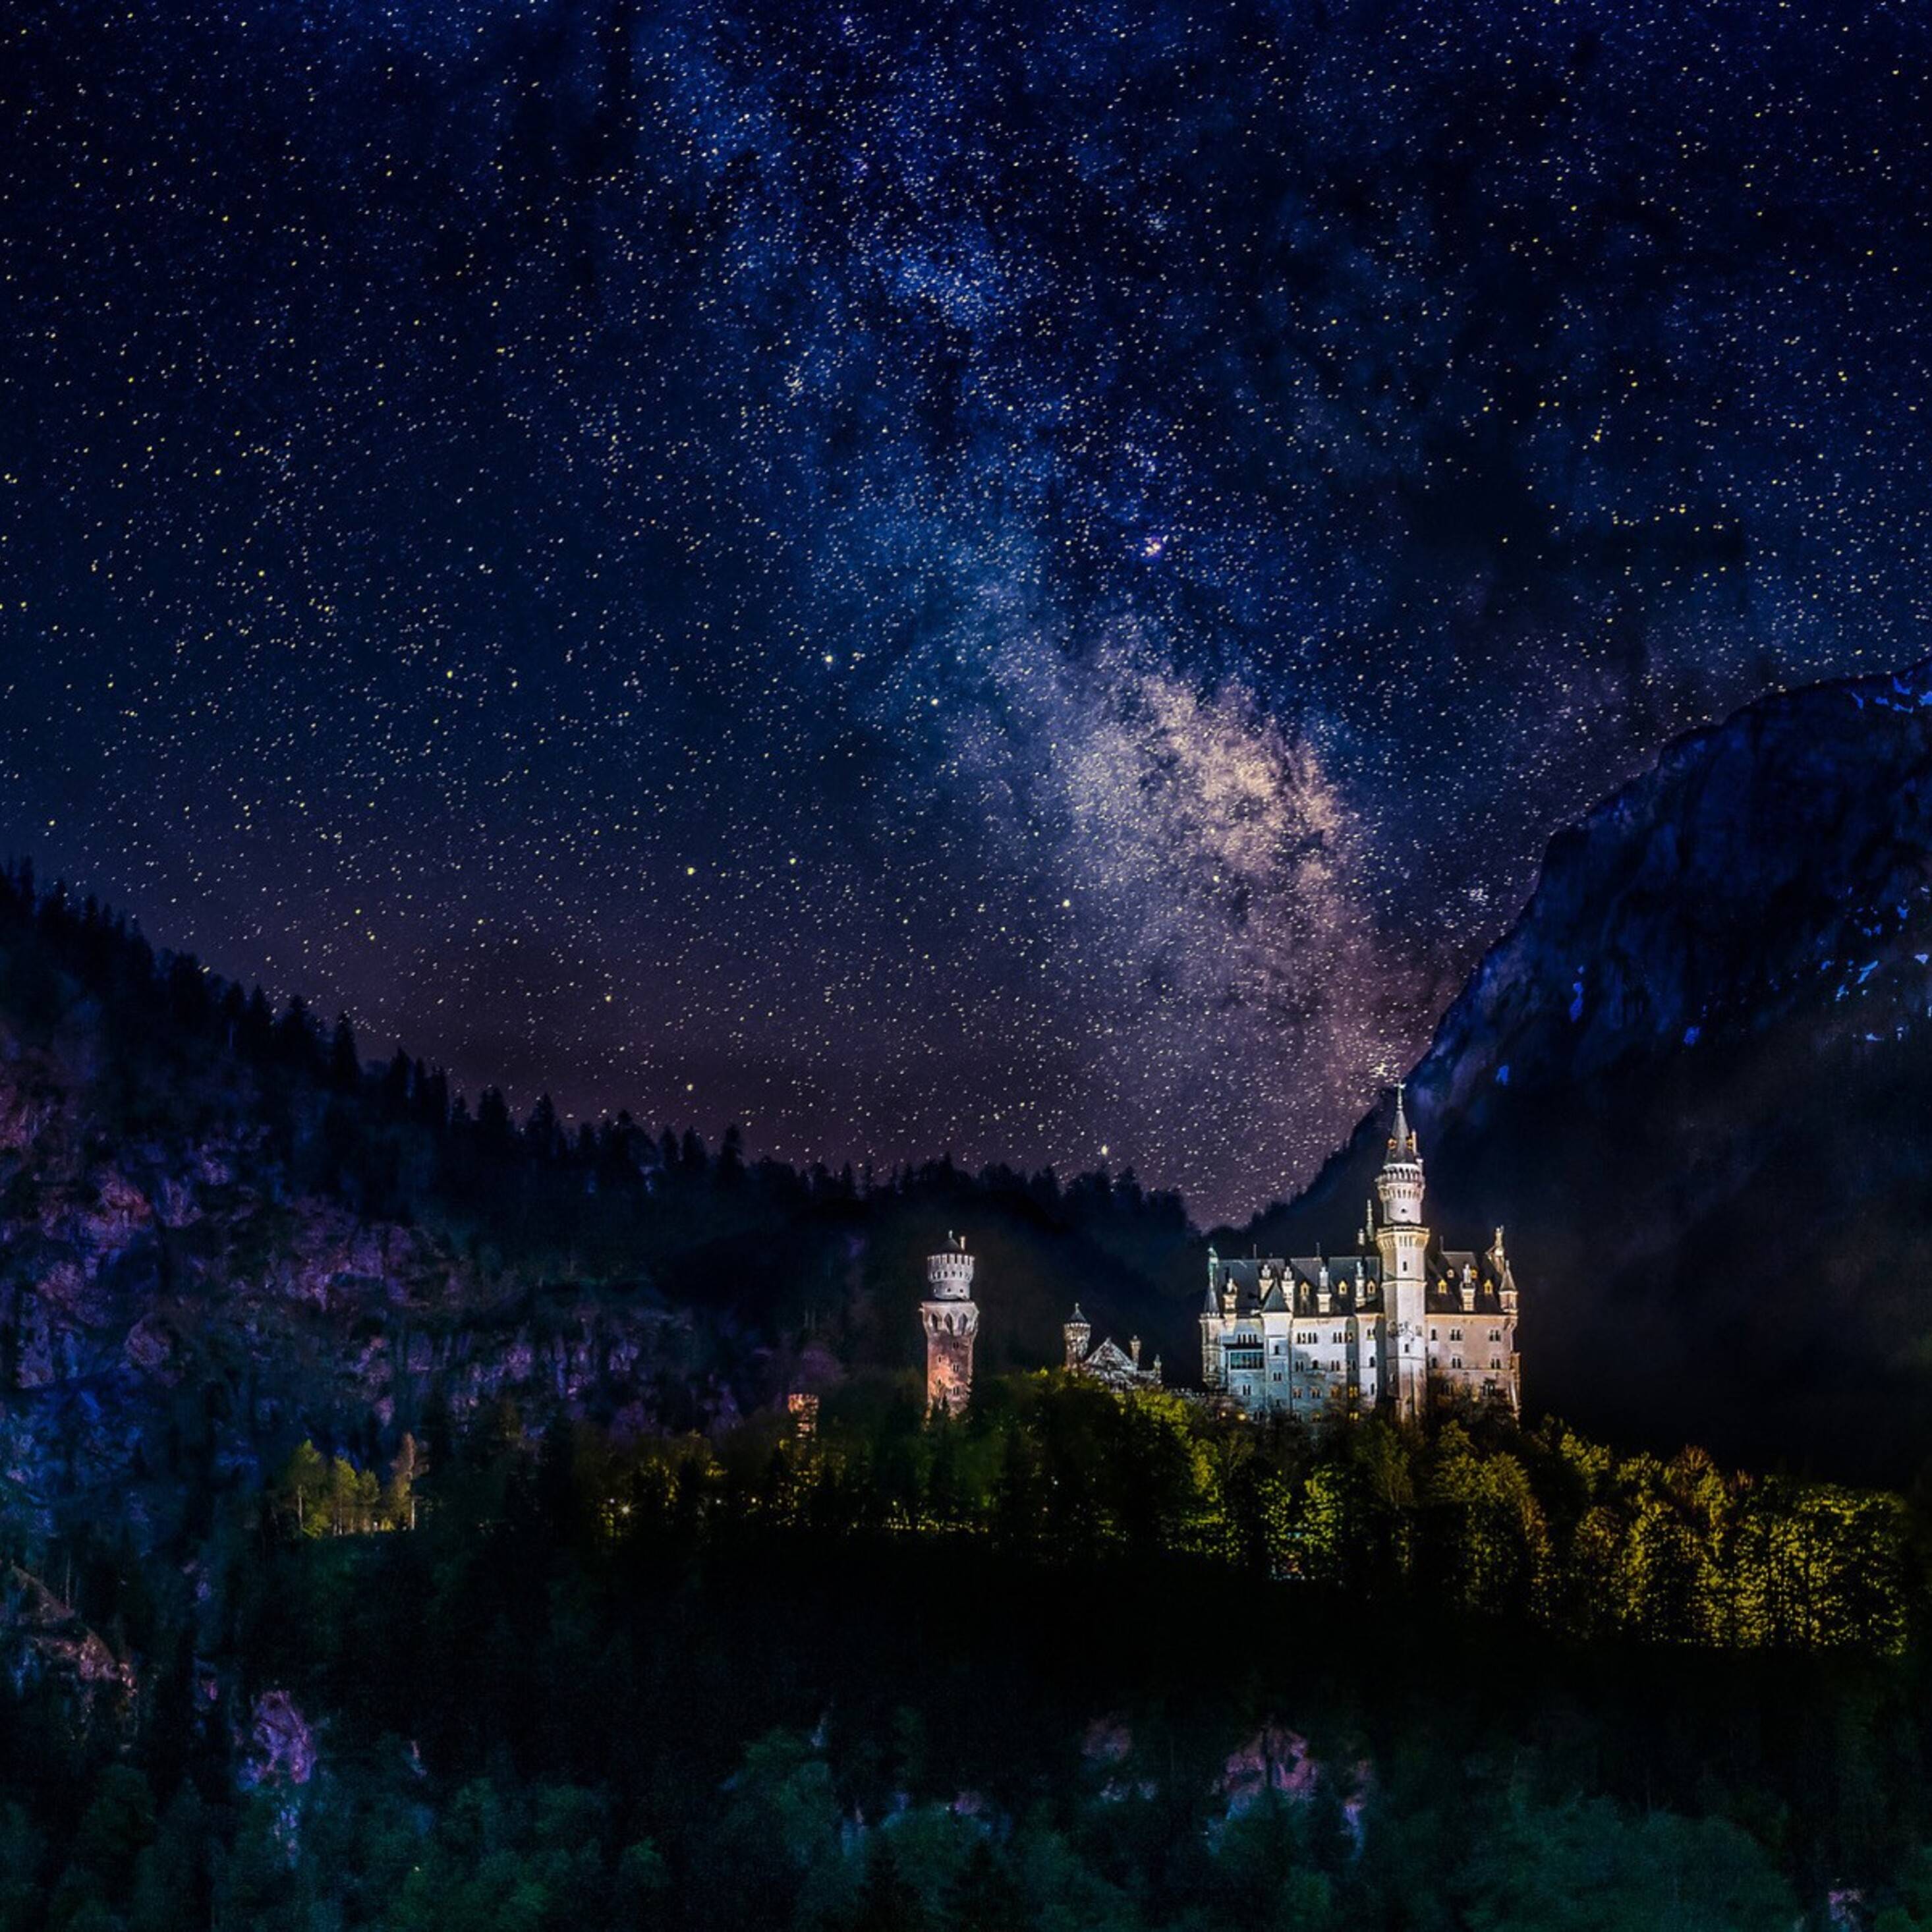 A castle is lit up under the night sky - Castle